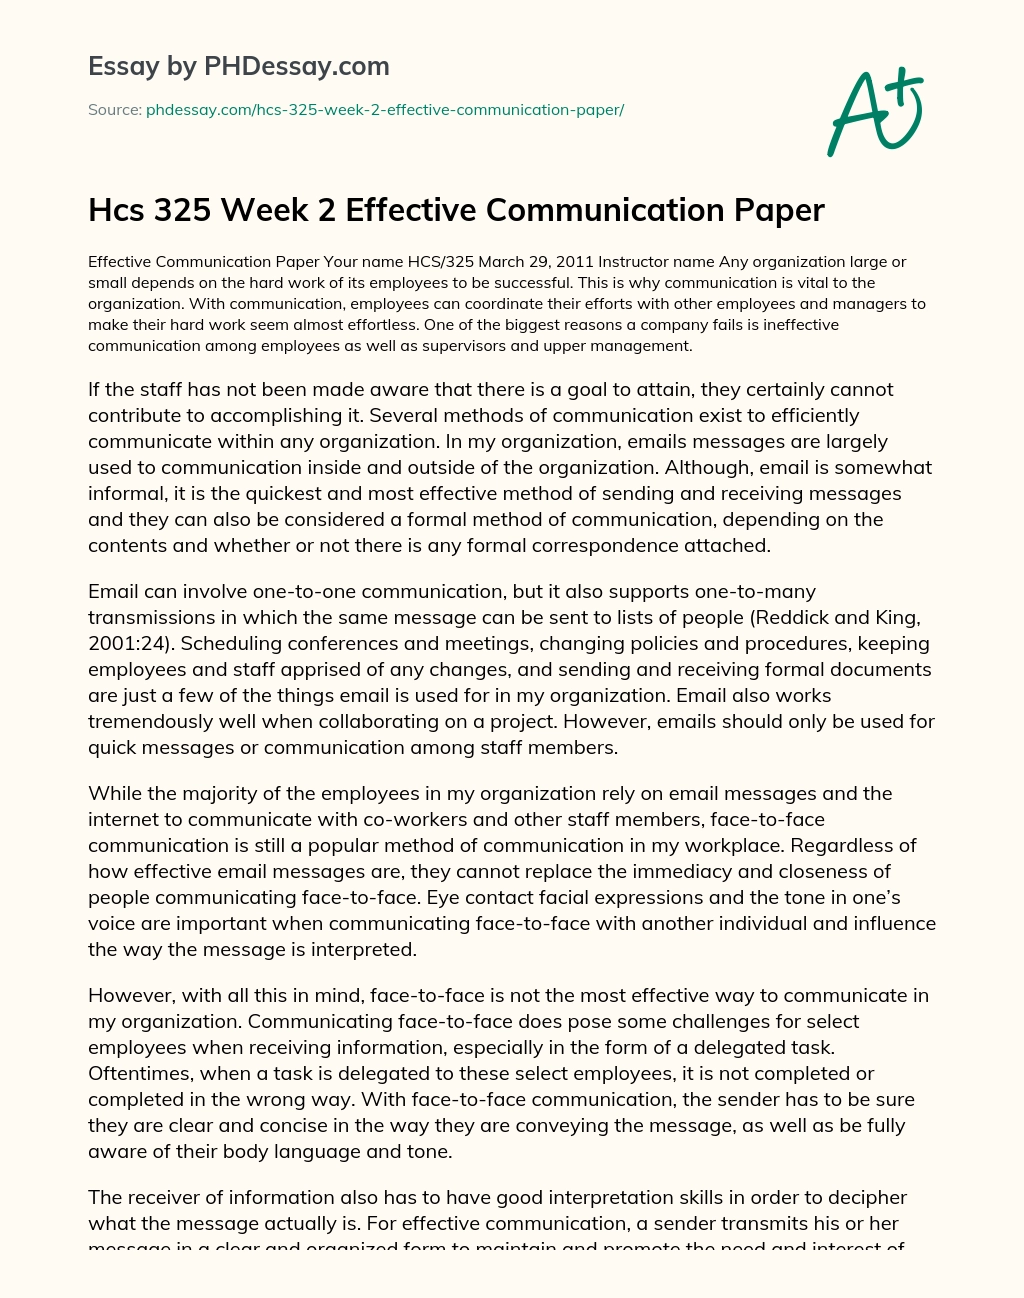 Hcs 325 Week 2 Effective Communication Paper essay